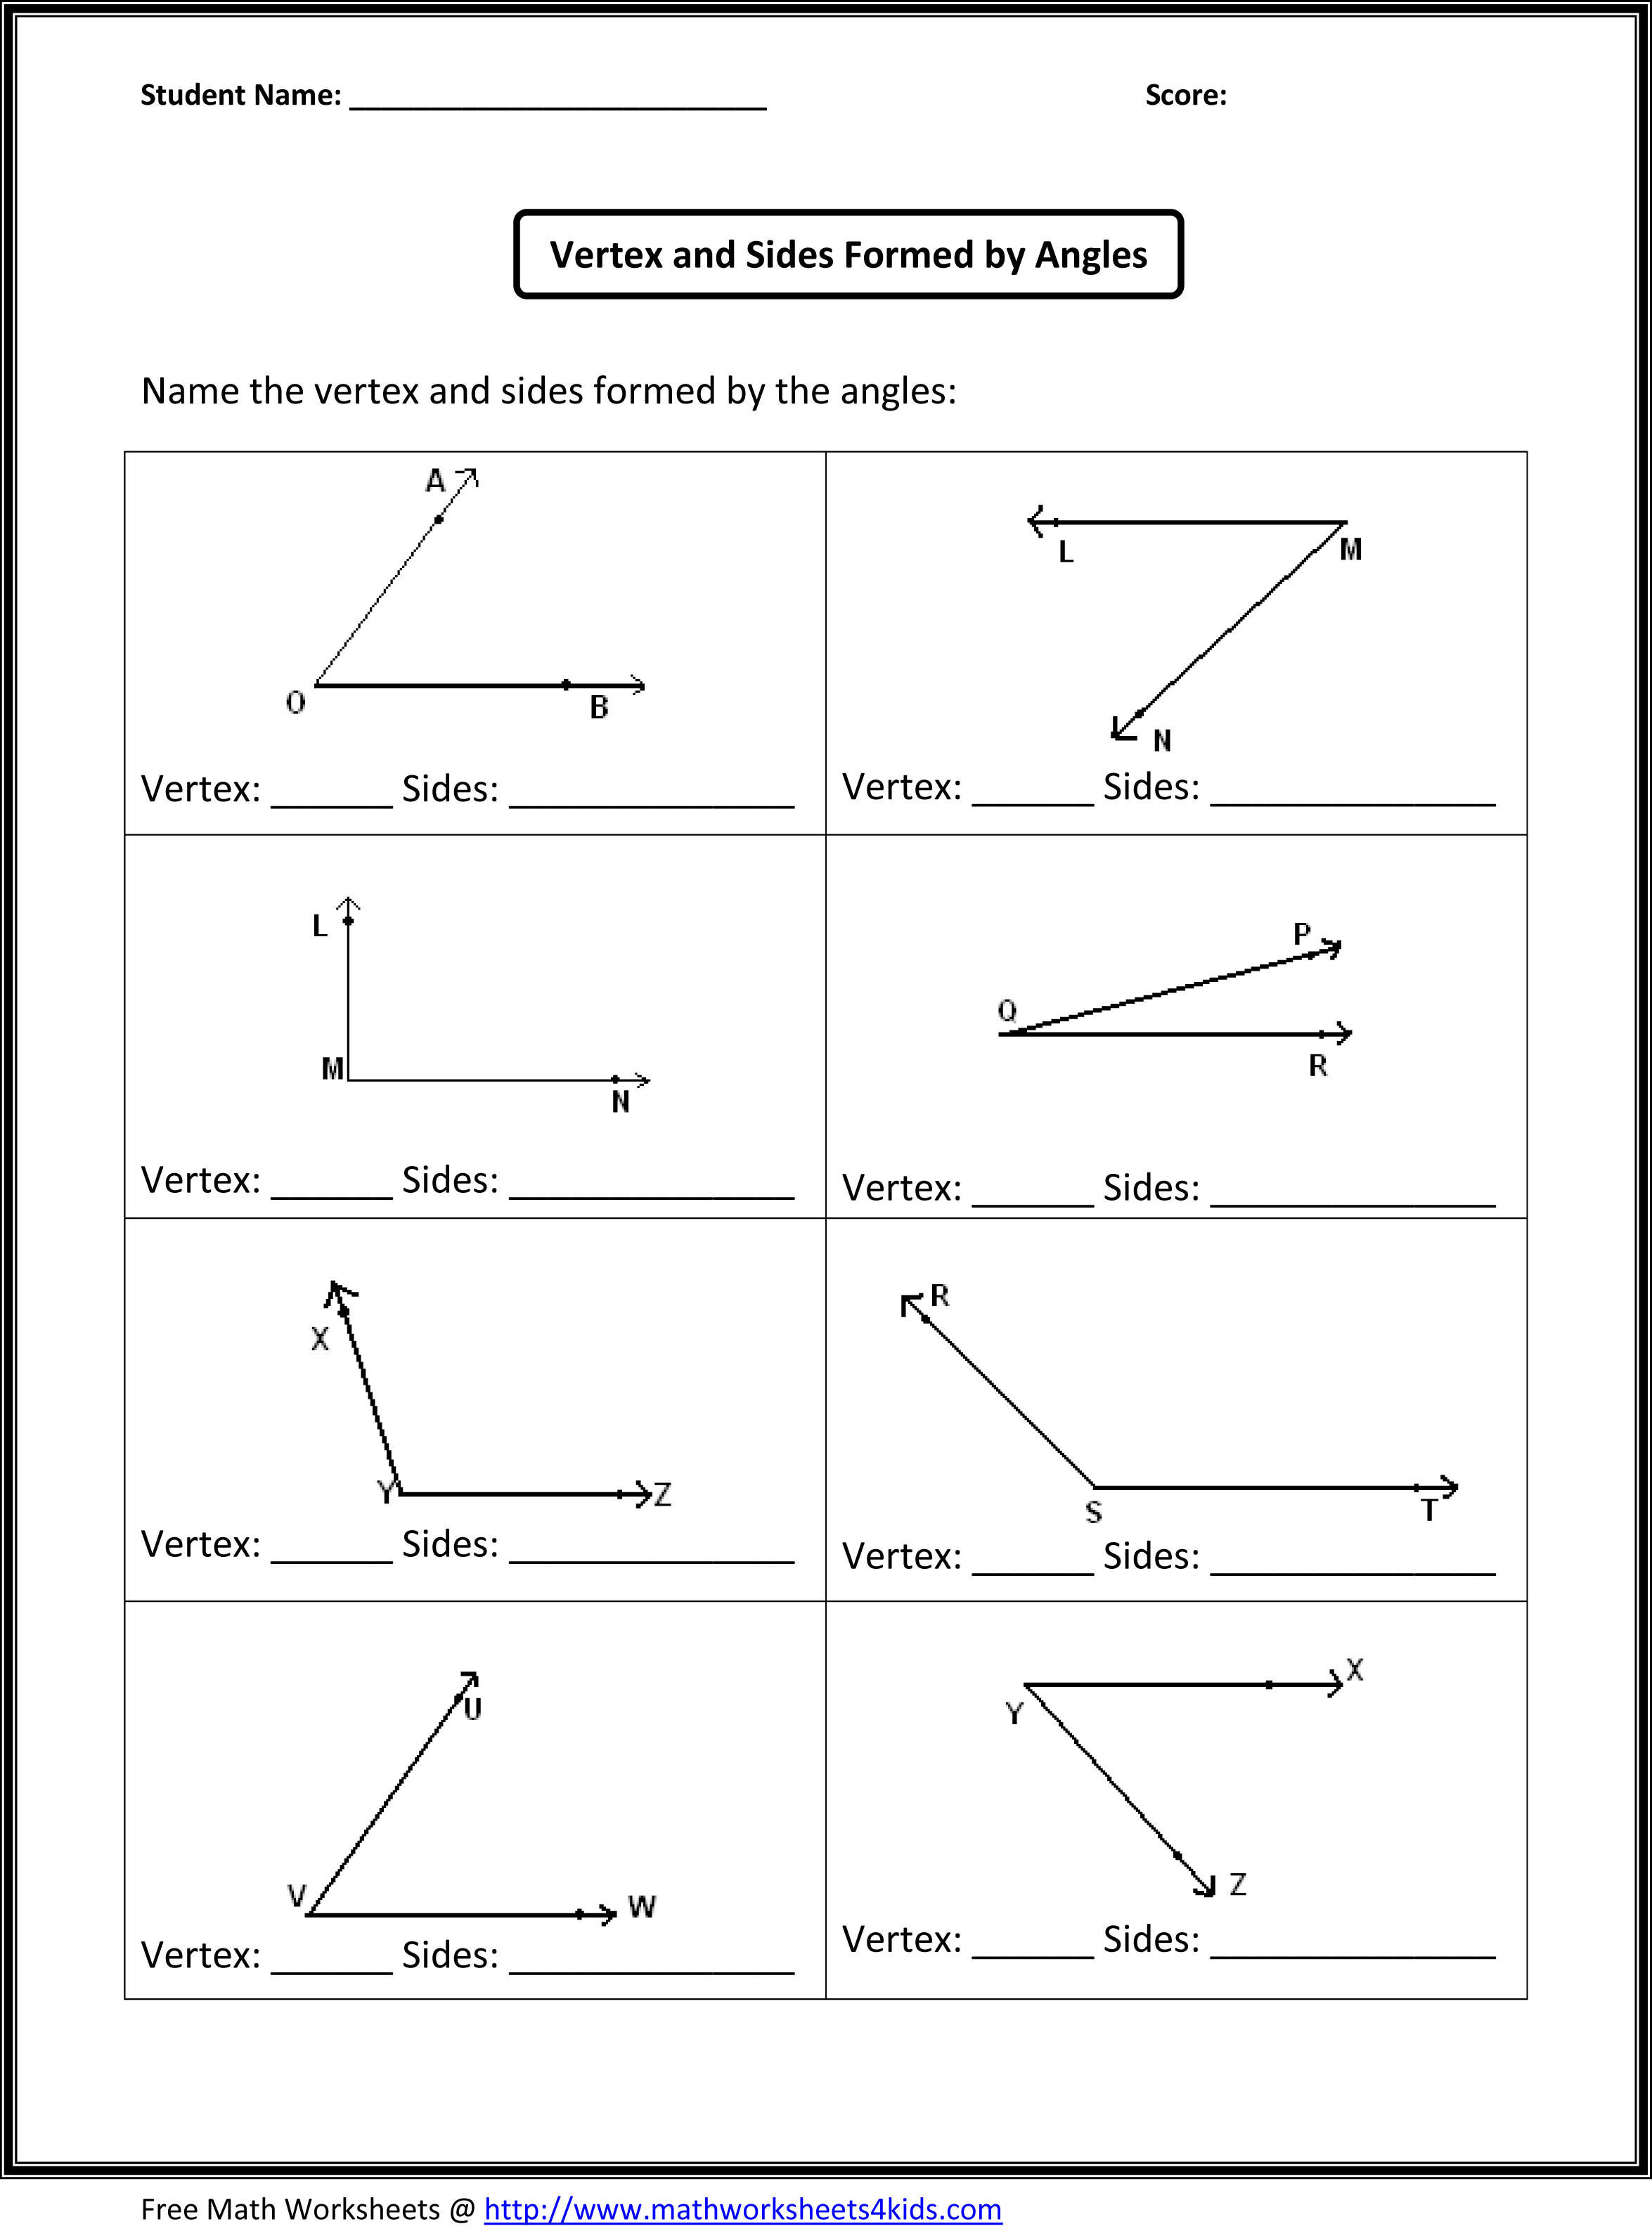 5th-grade-geometry-worksheets